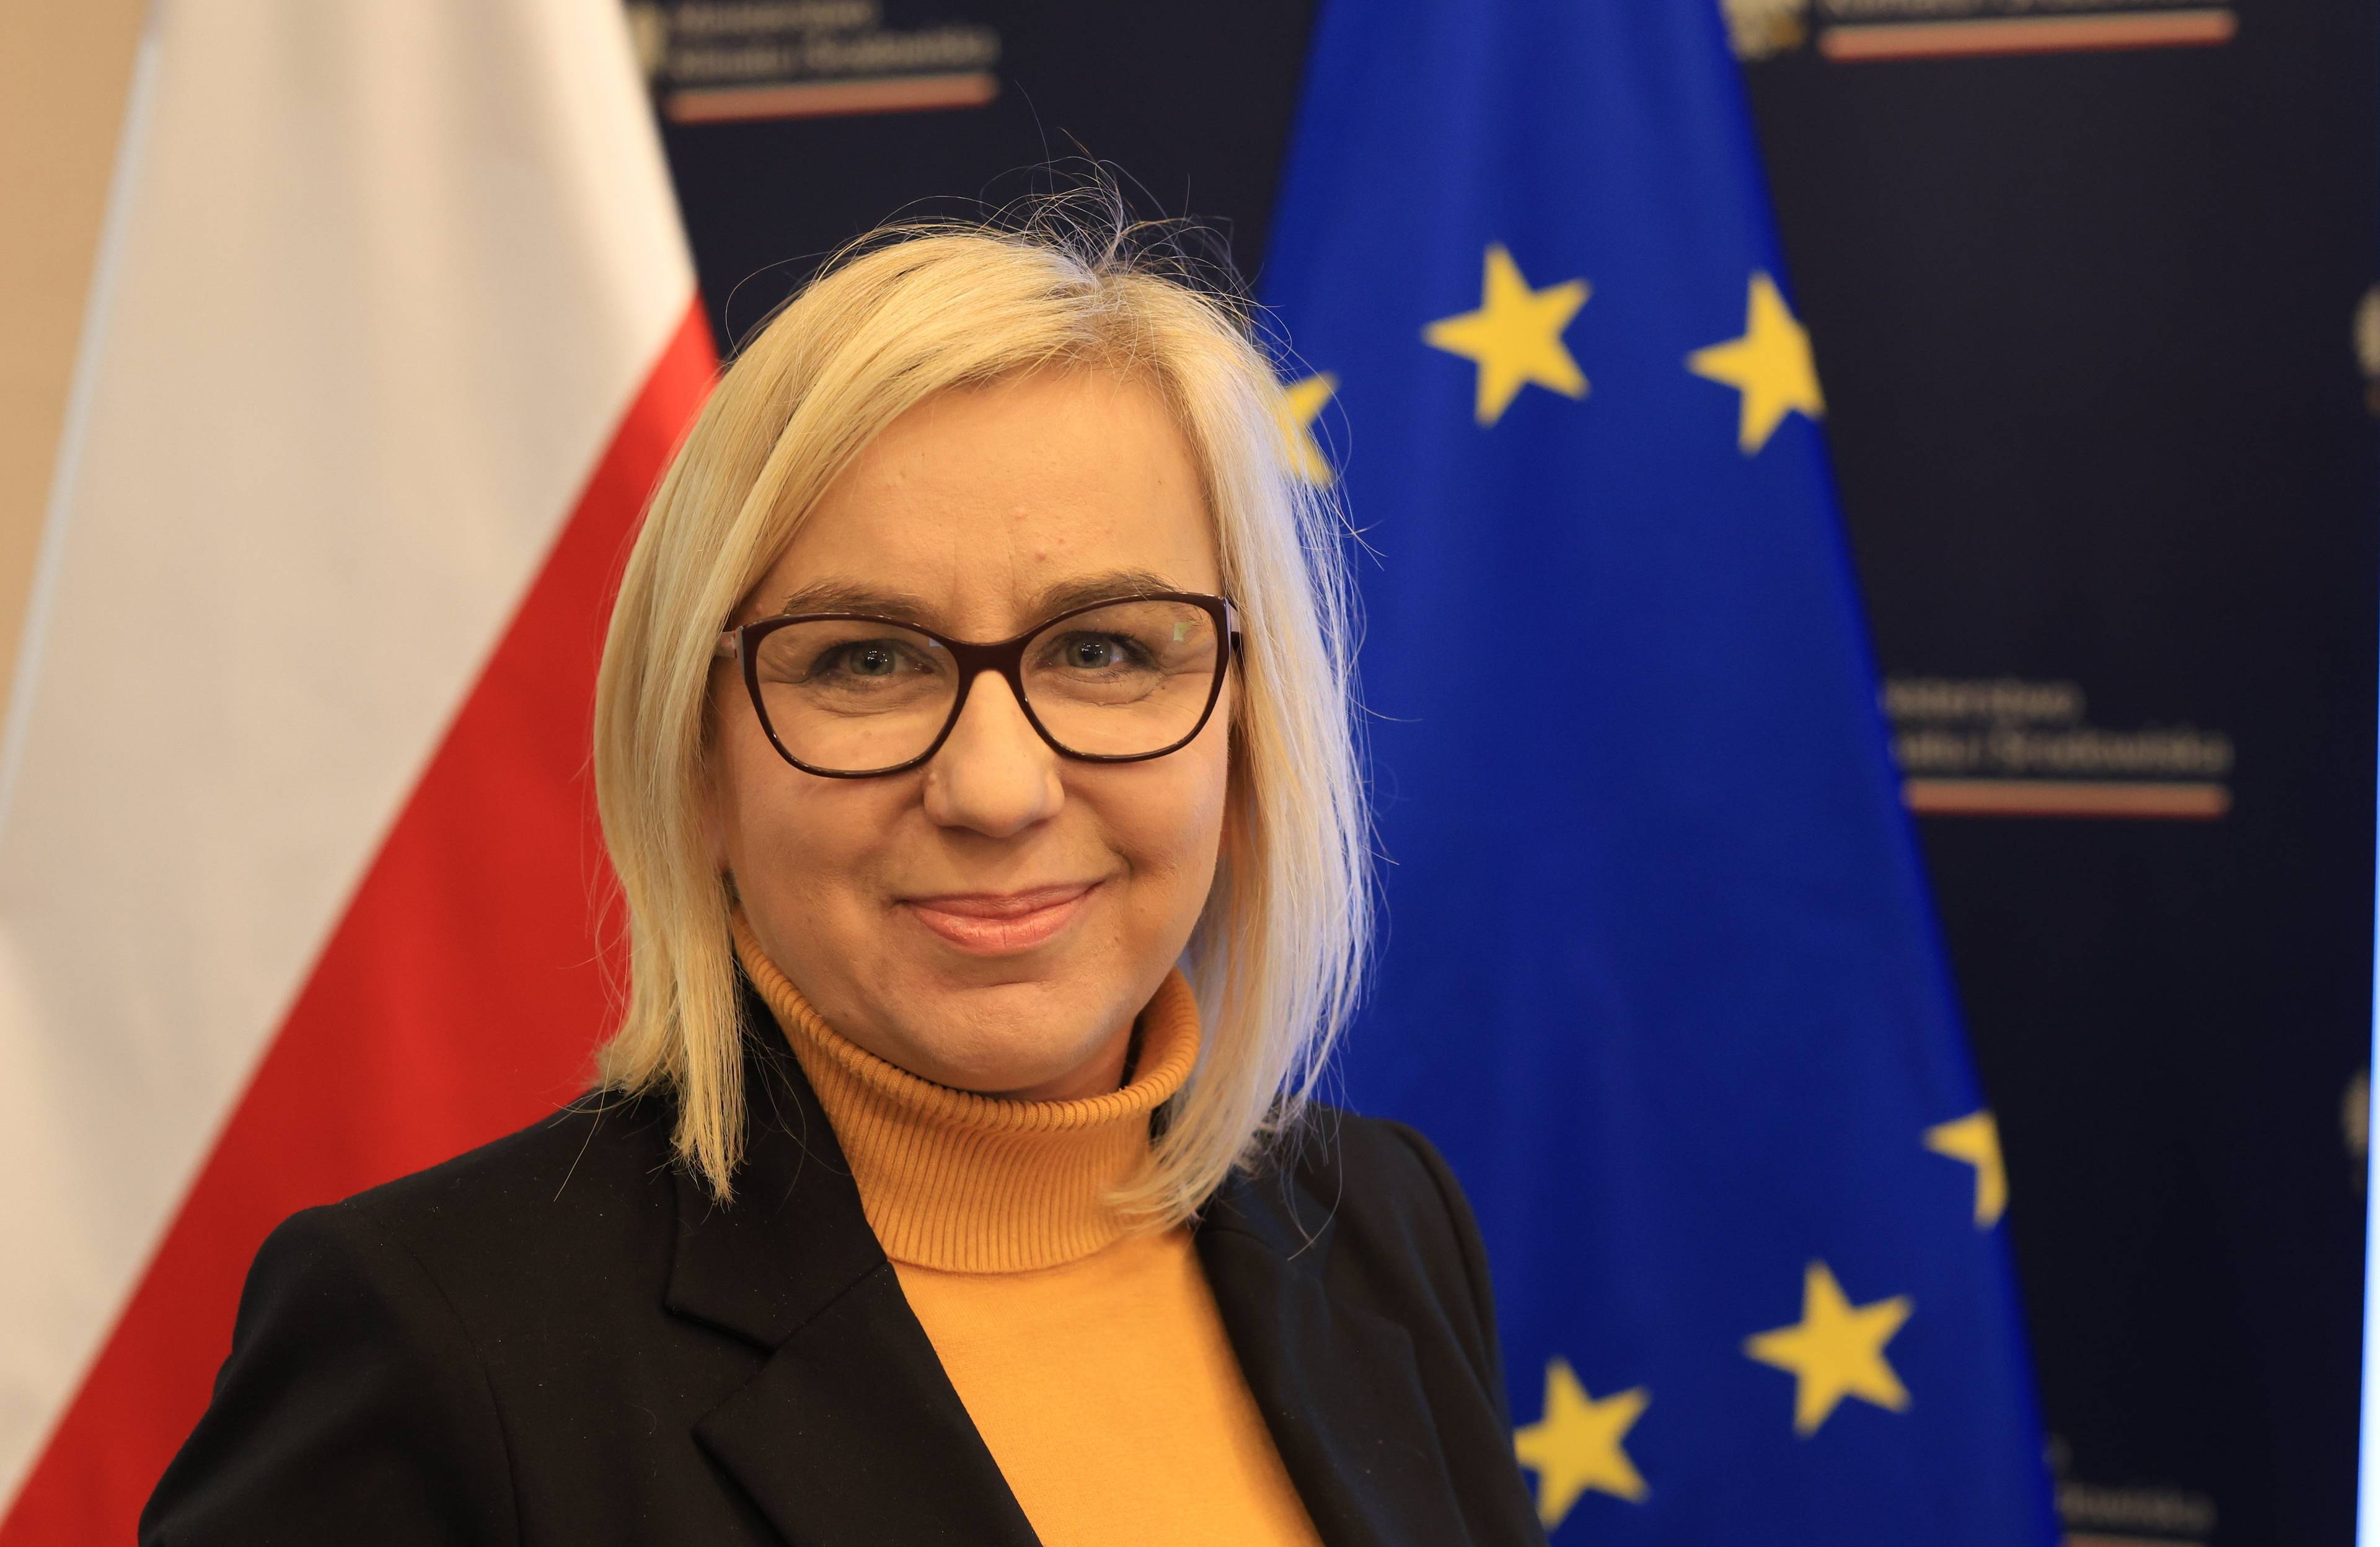 Ministra Paulina Henning-Kloska na tle flag Polski i Unii Europejskiej